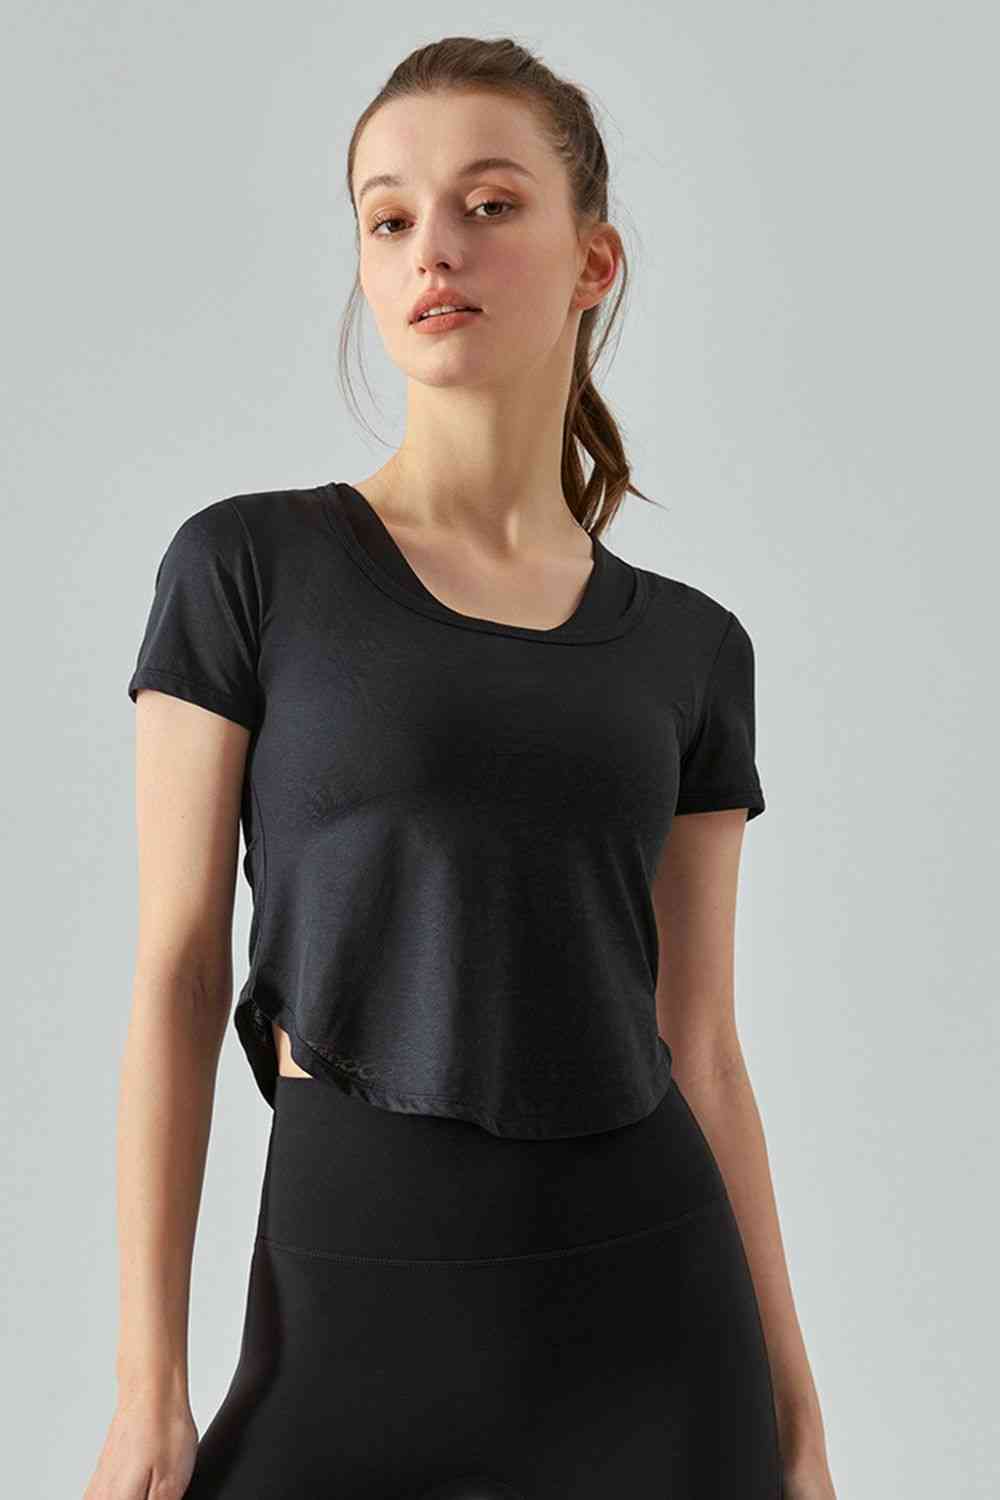 Round Neck Short Sleeve Sports T-Shirt Black